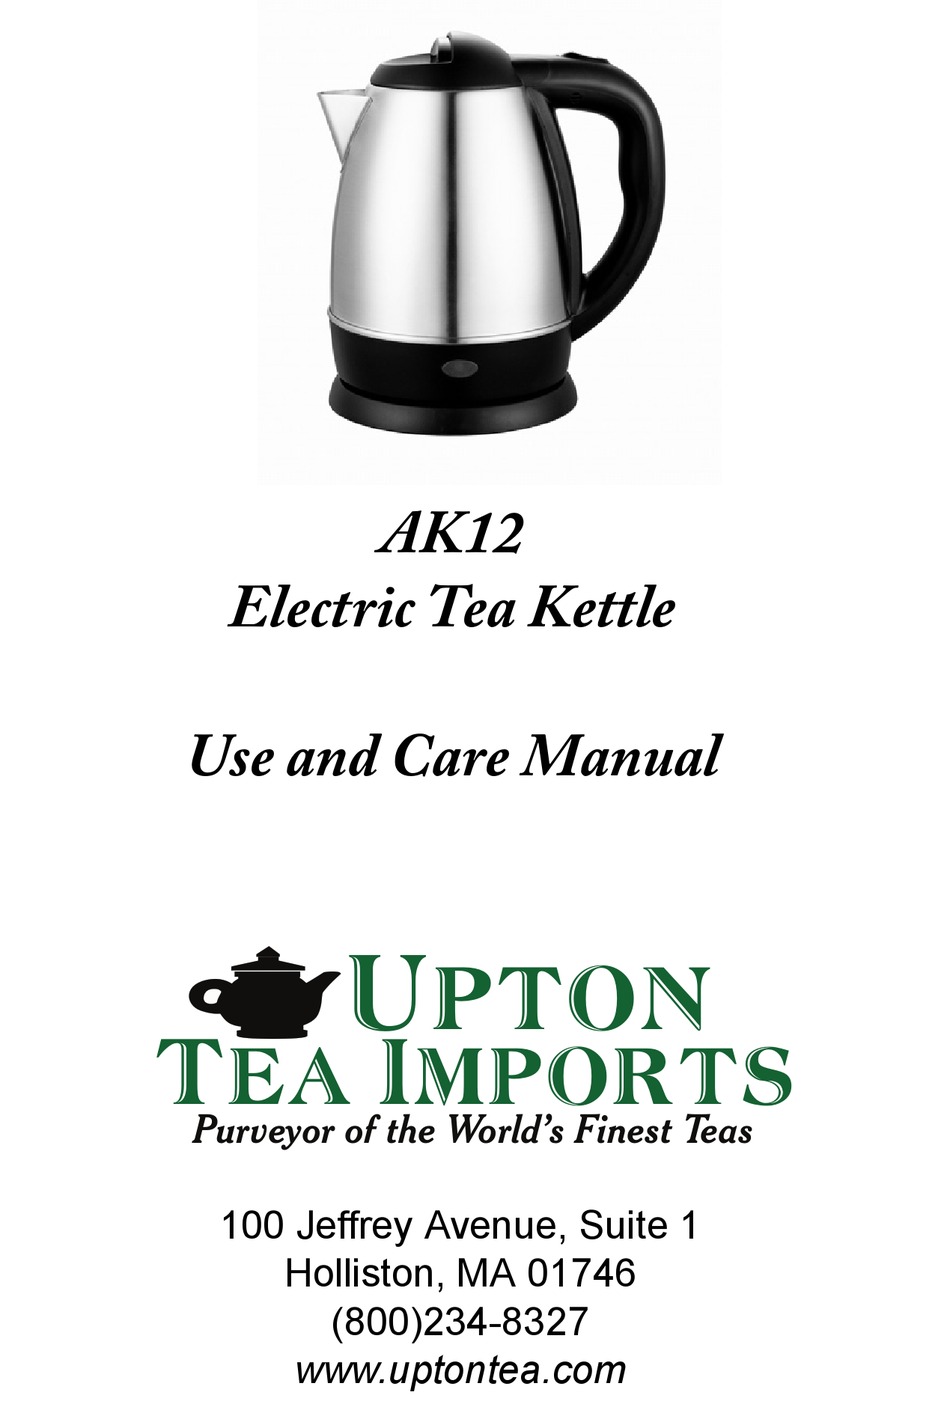 https://data2.manualslib.com/first-image/i21/104/10349/1034818/upton-tea-imports-ak12.jpg